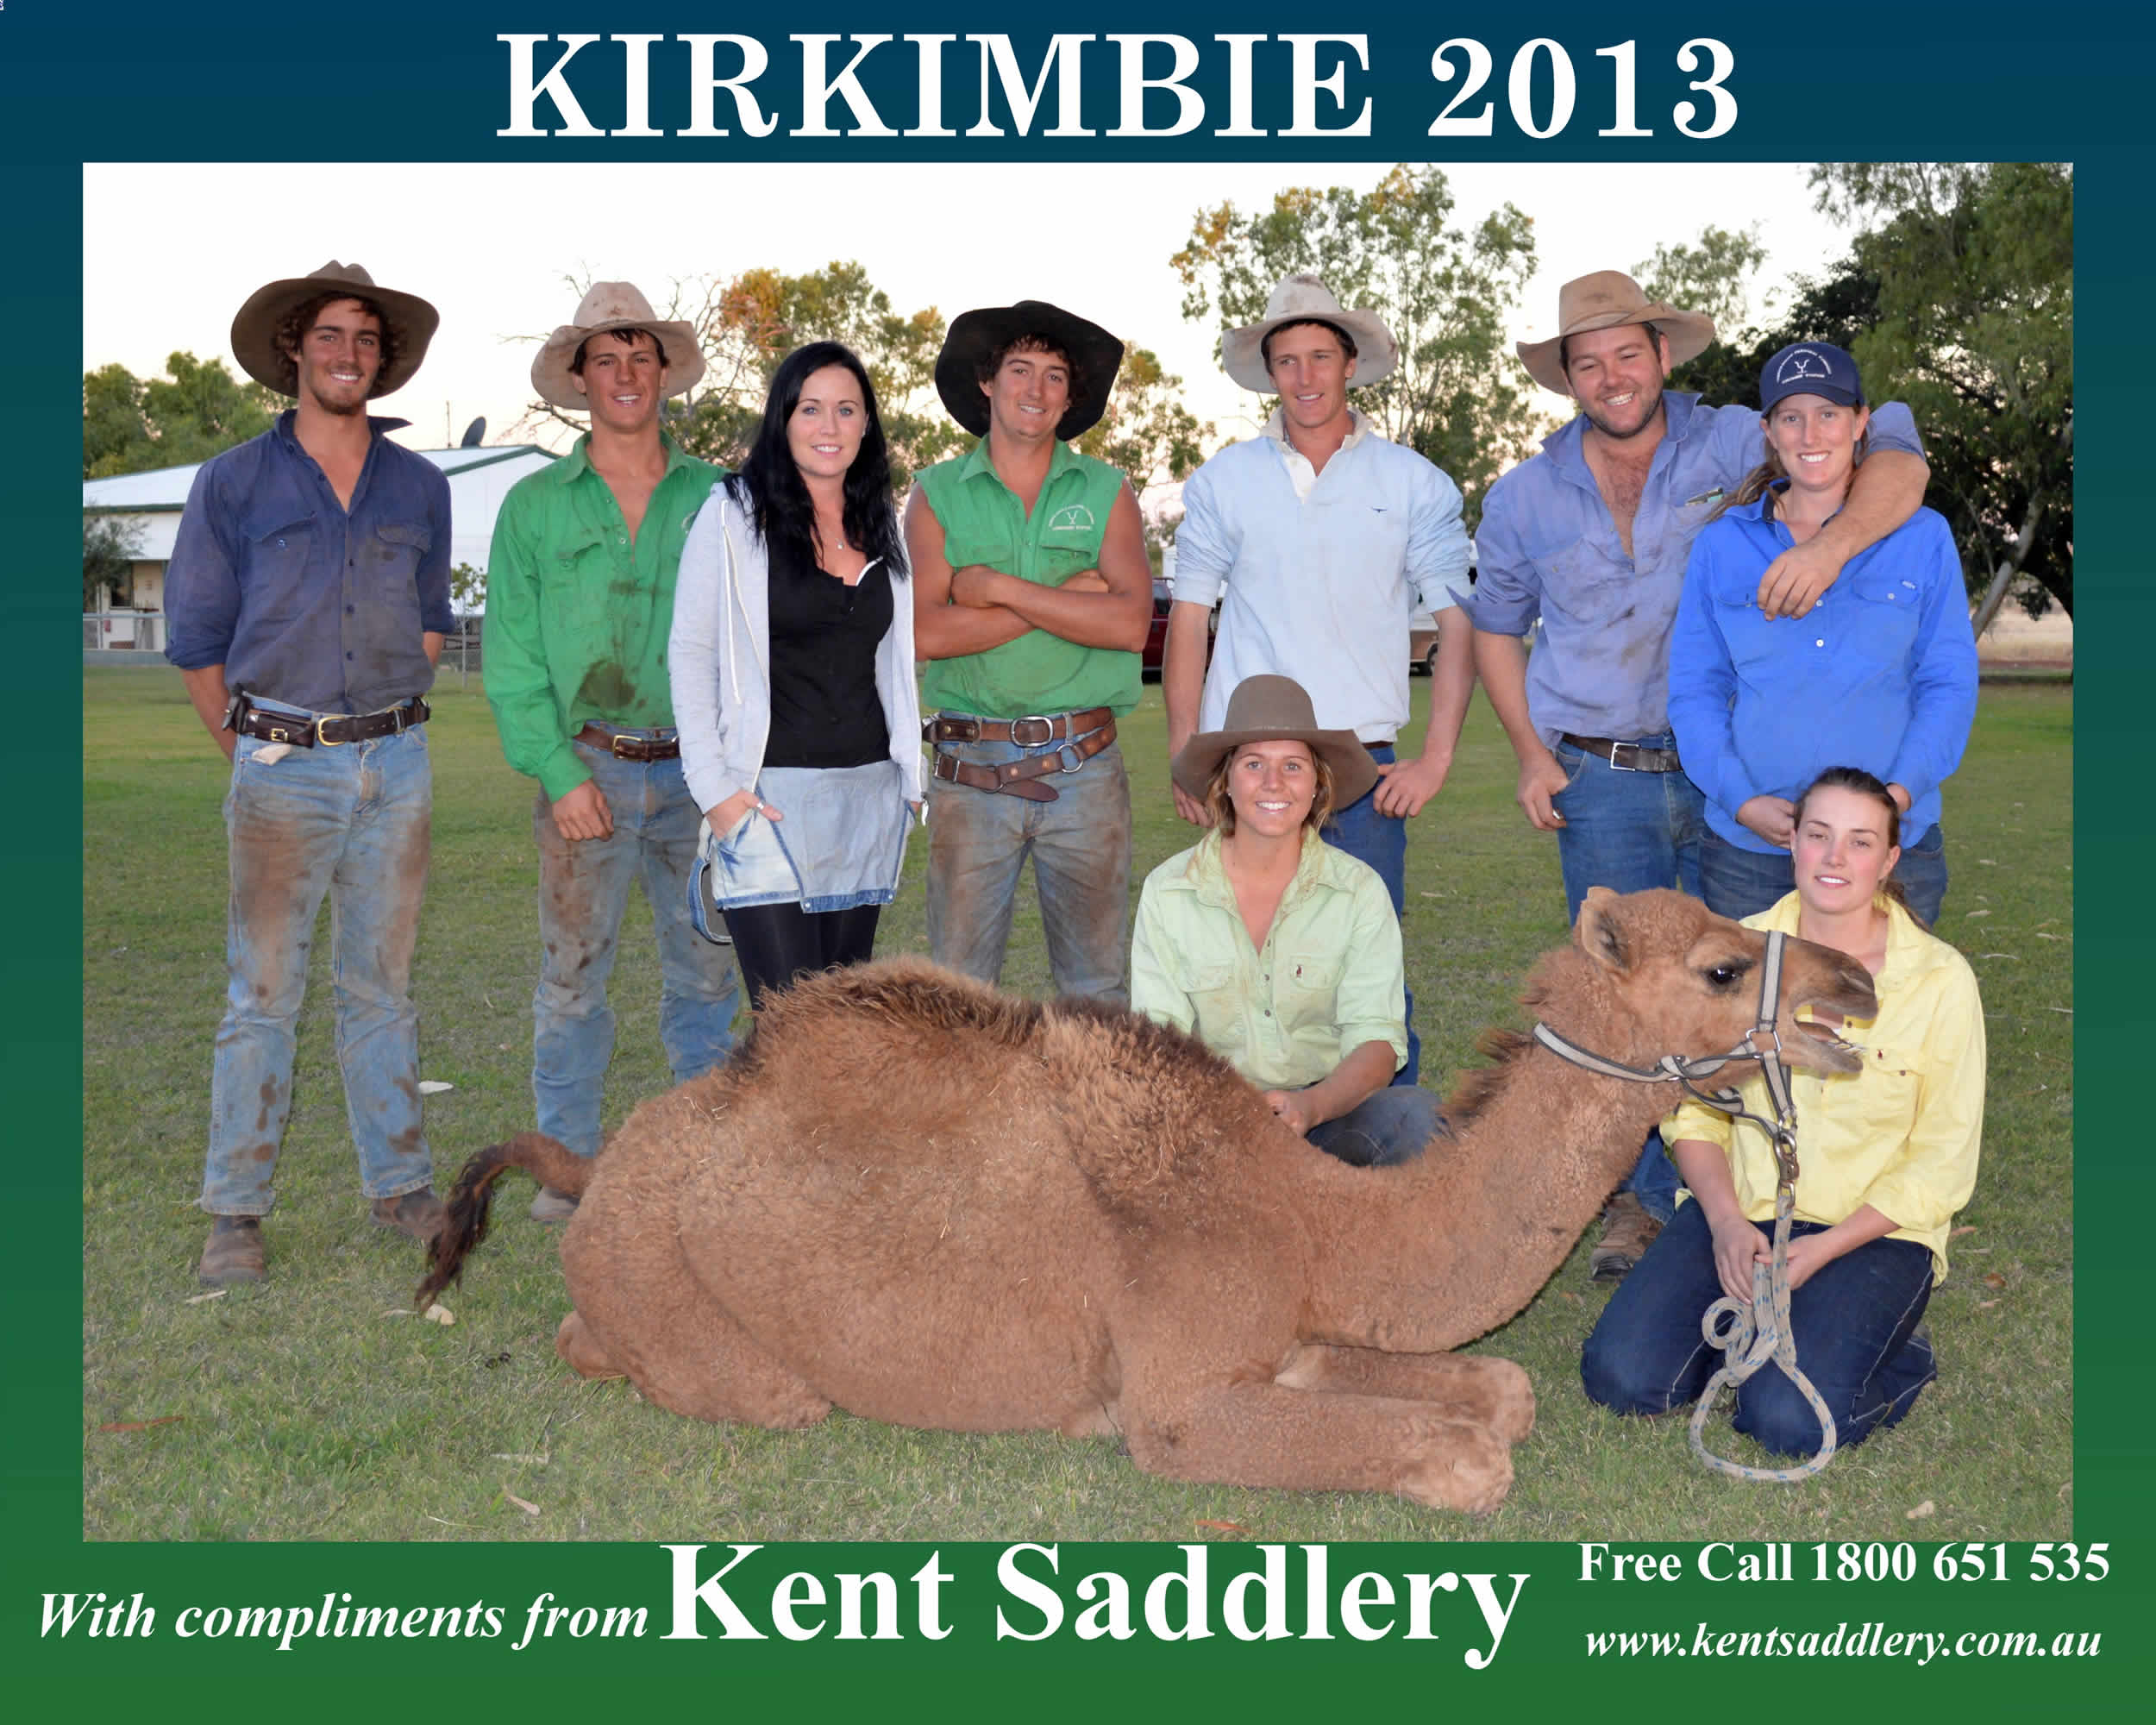 Northern Territory - Kirkimbie 10